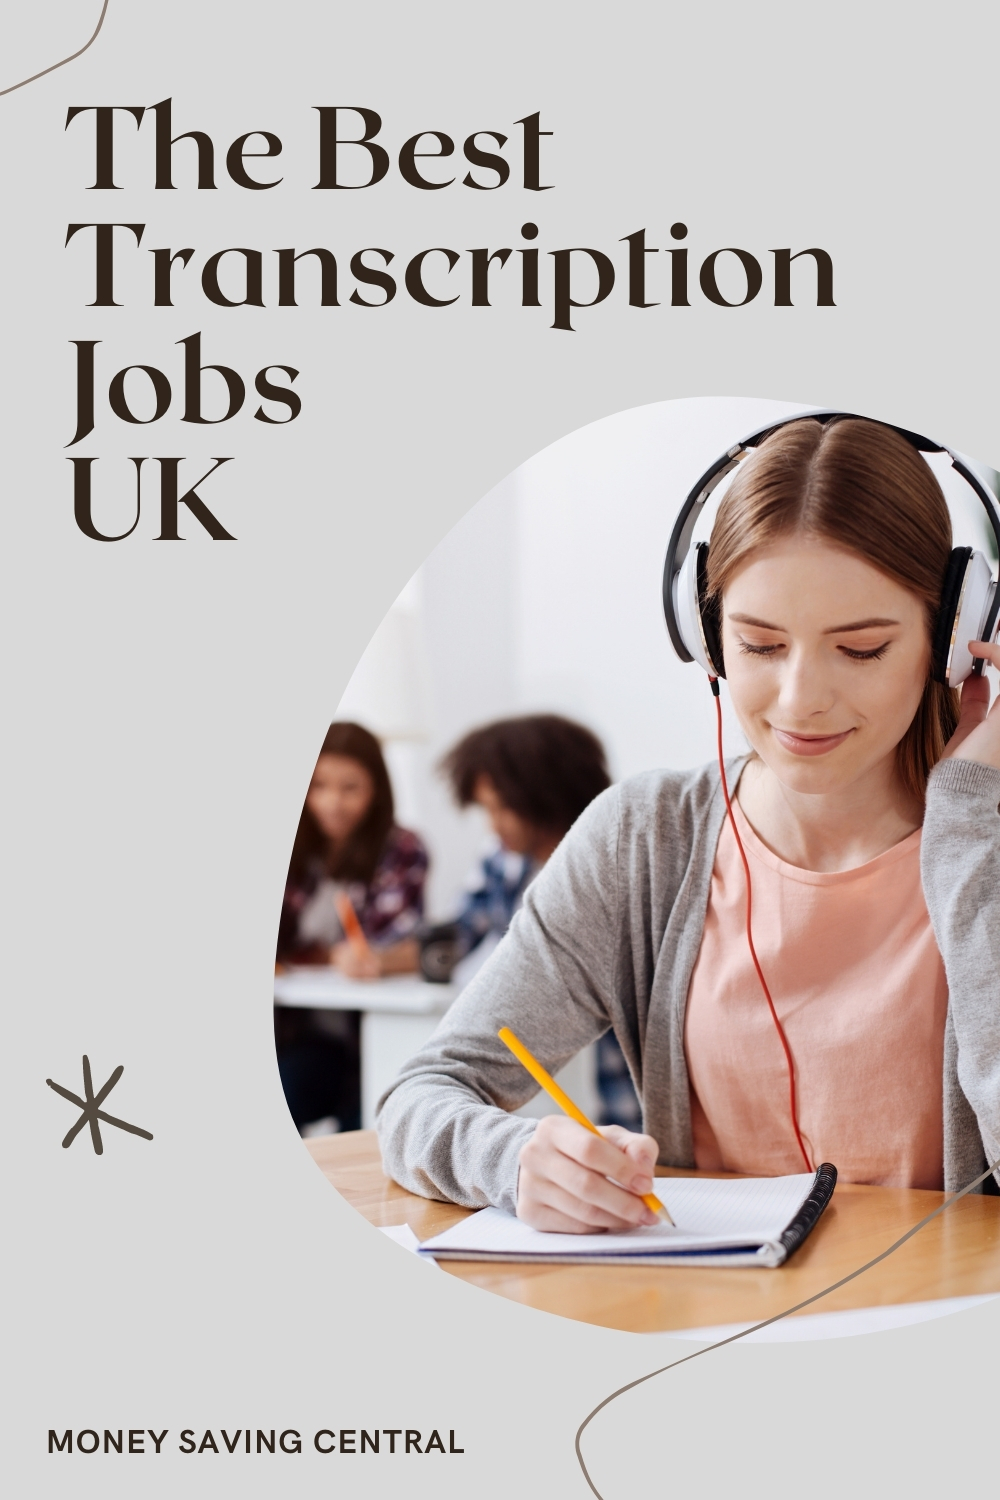 Transcription Jobs UK - Earn Money Typing & Transcribing at Home